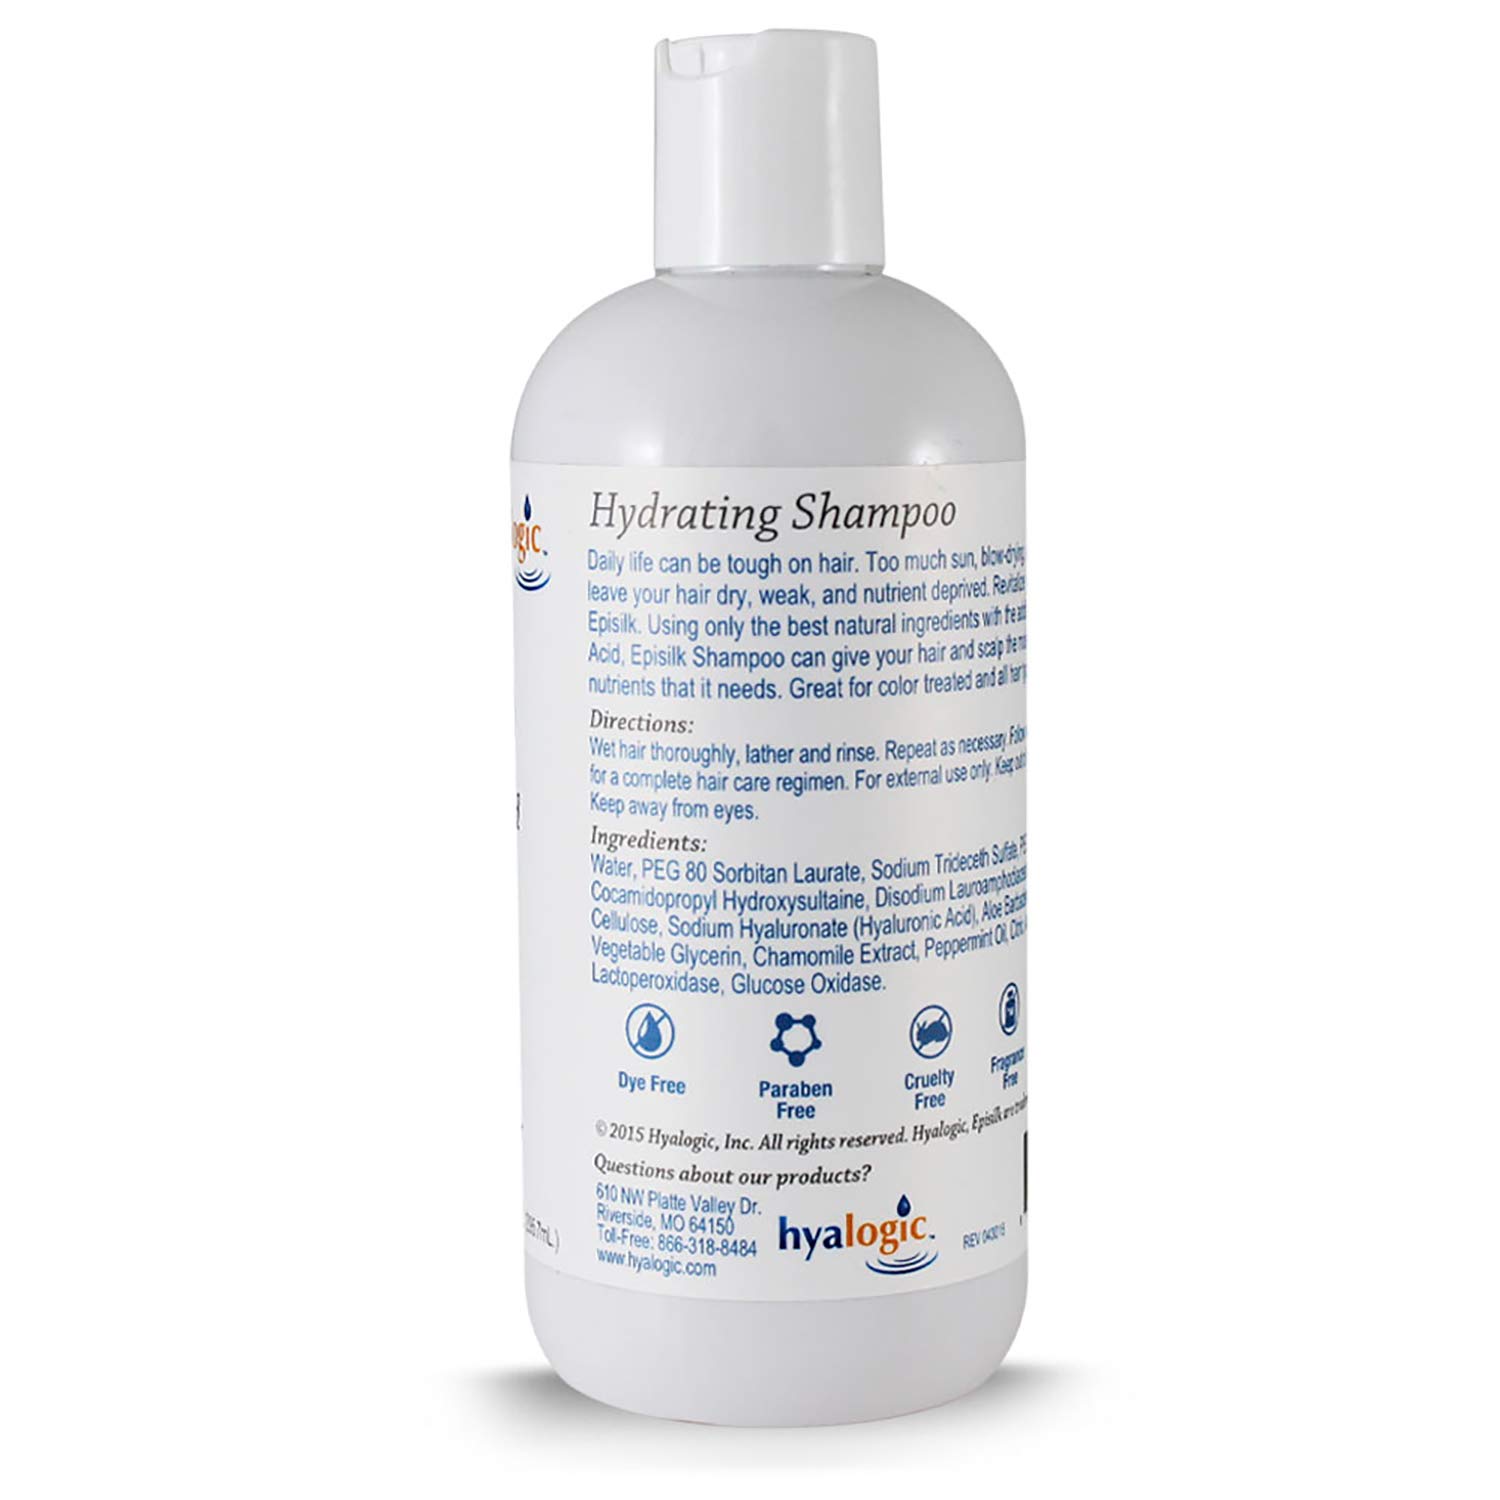 Hyalogic Shampoo - Moisturizing Shampoo with Hyaluronic Acid (HA), Episilk Daily Cleansing Shampoo, Hydrating Shampoo, Detangling Shampoo, Purifying Shampoo for All Hair Types, 10 fl oz.